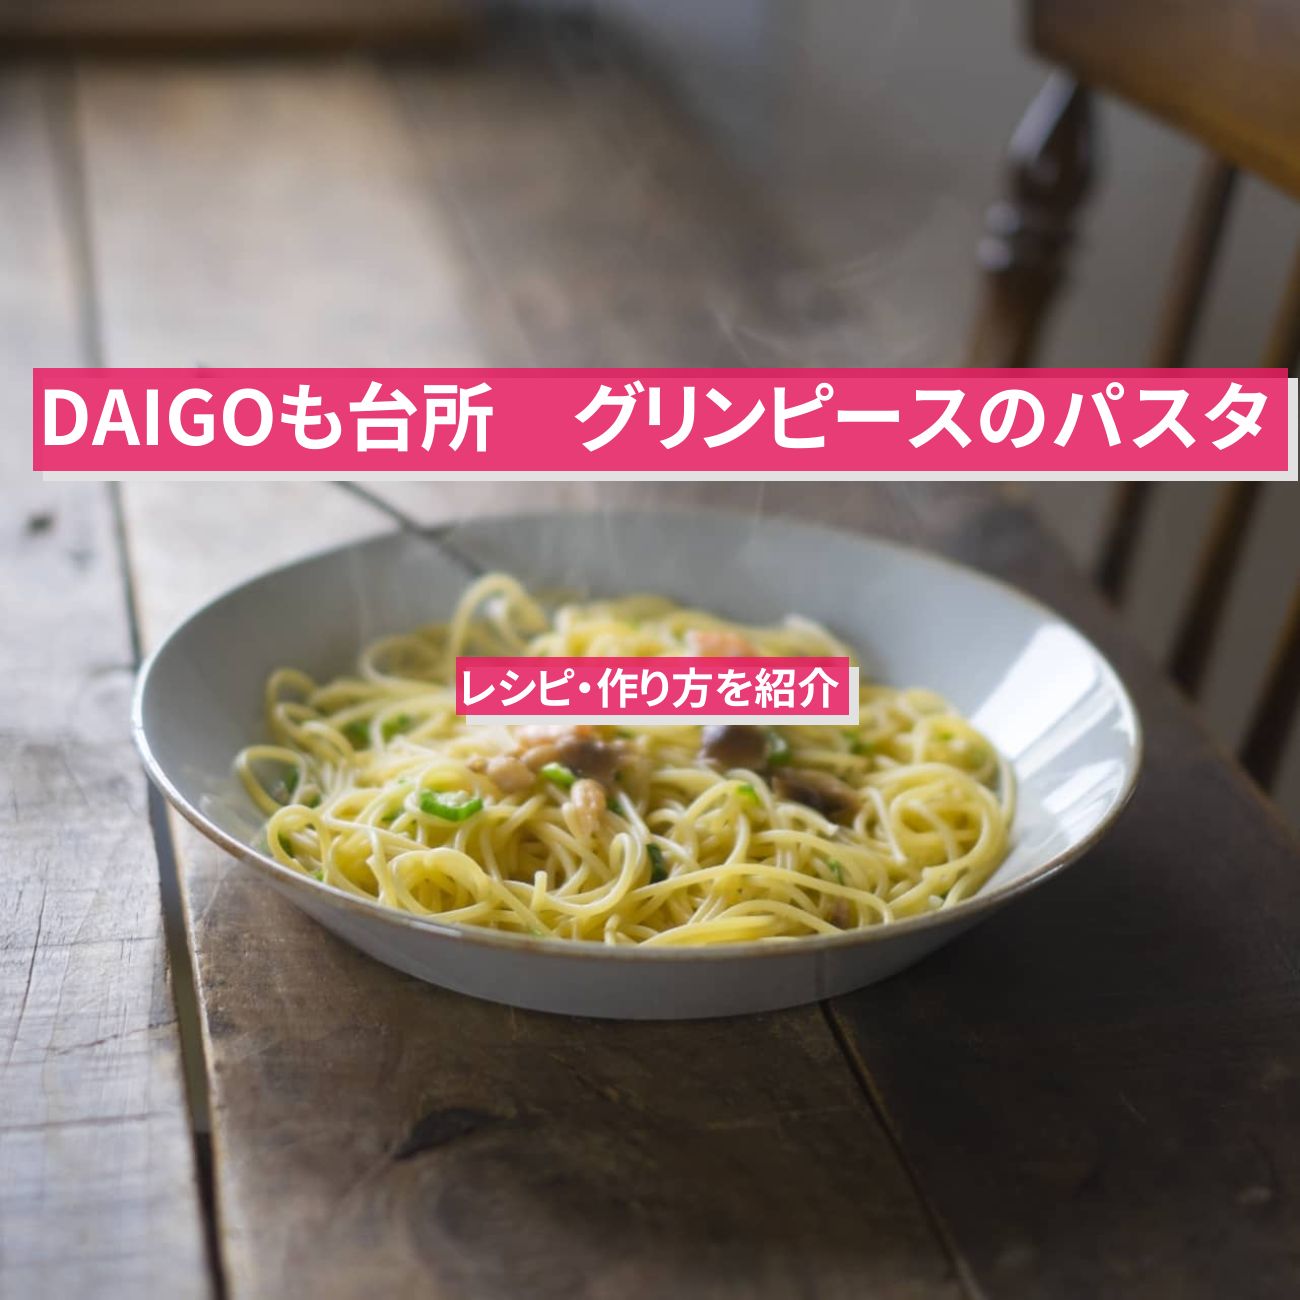 【DAIGOも台所】『グリンピースのパスタ』のレシピ・作り方を紹介〔ダイゴも台所〕